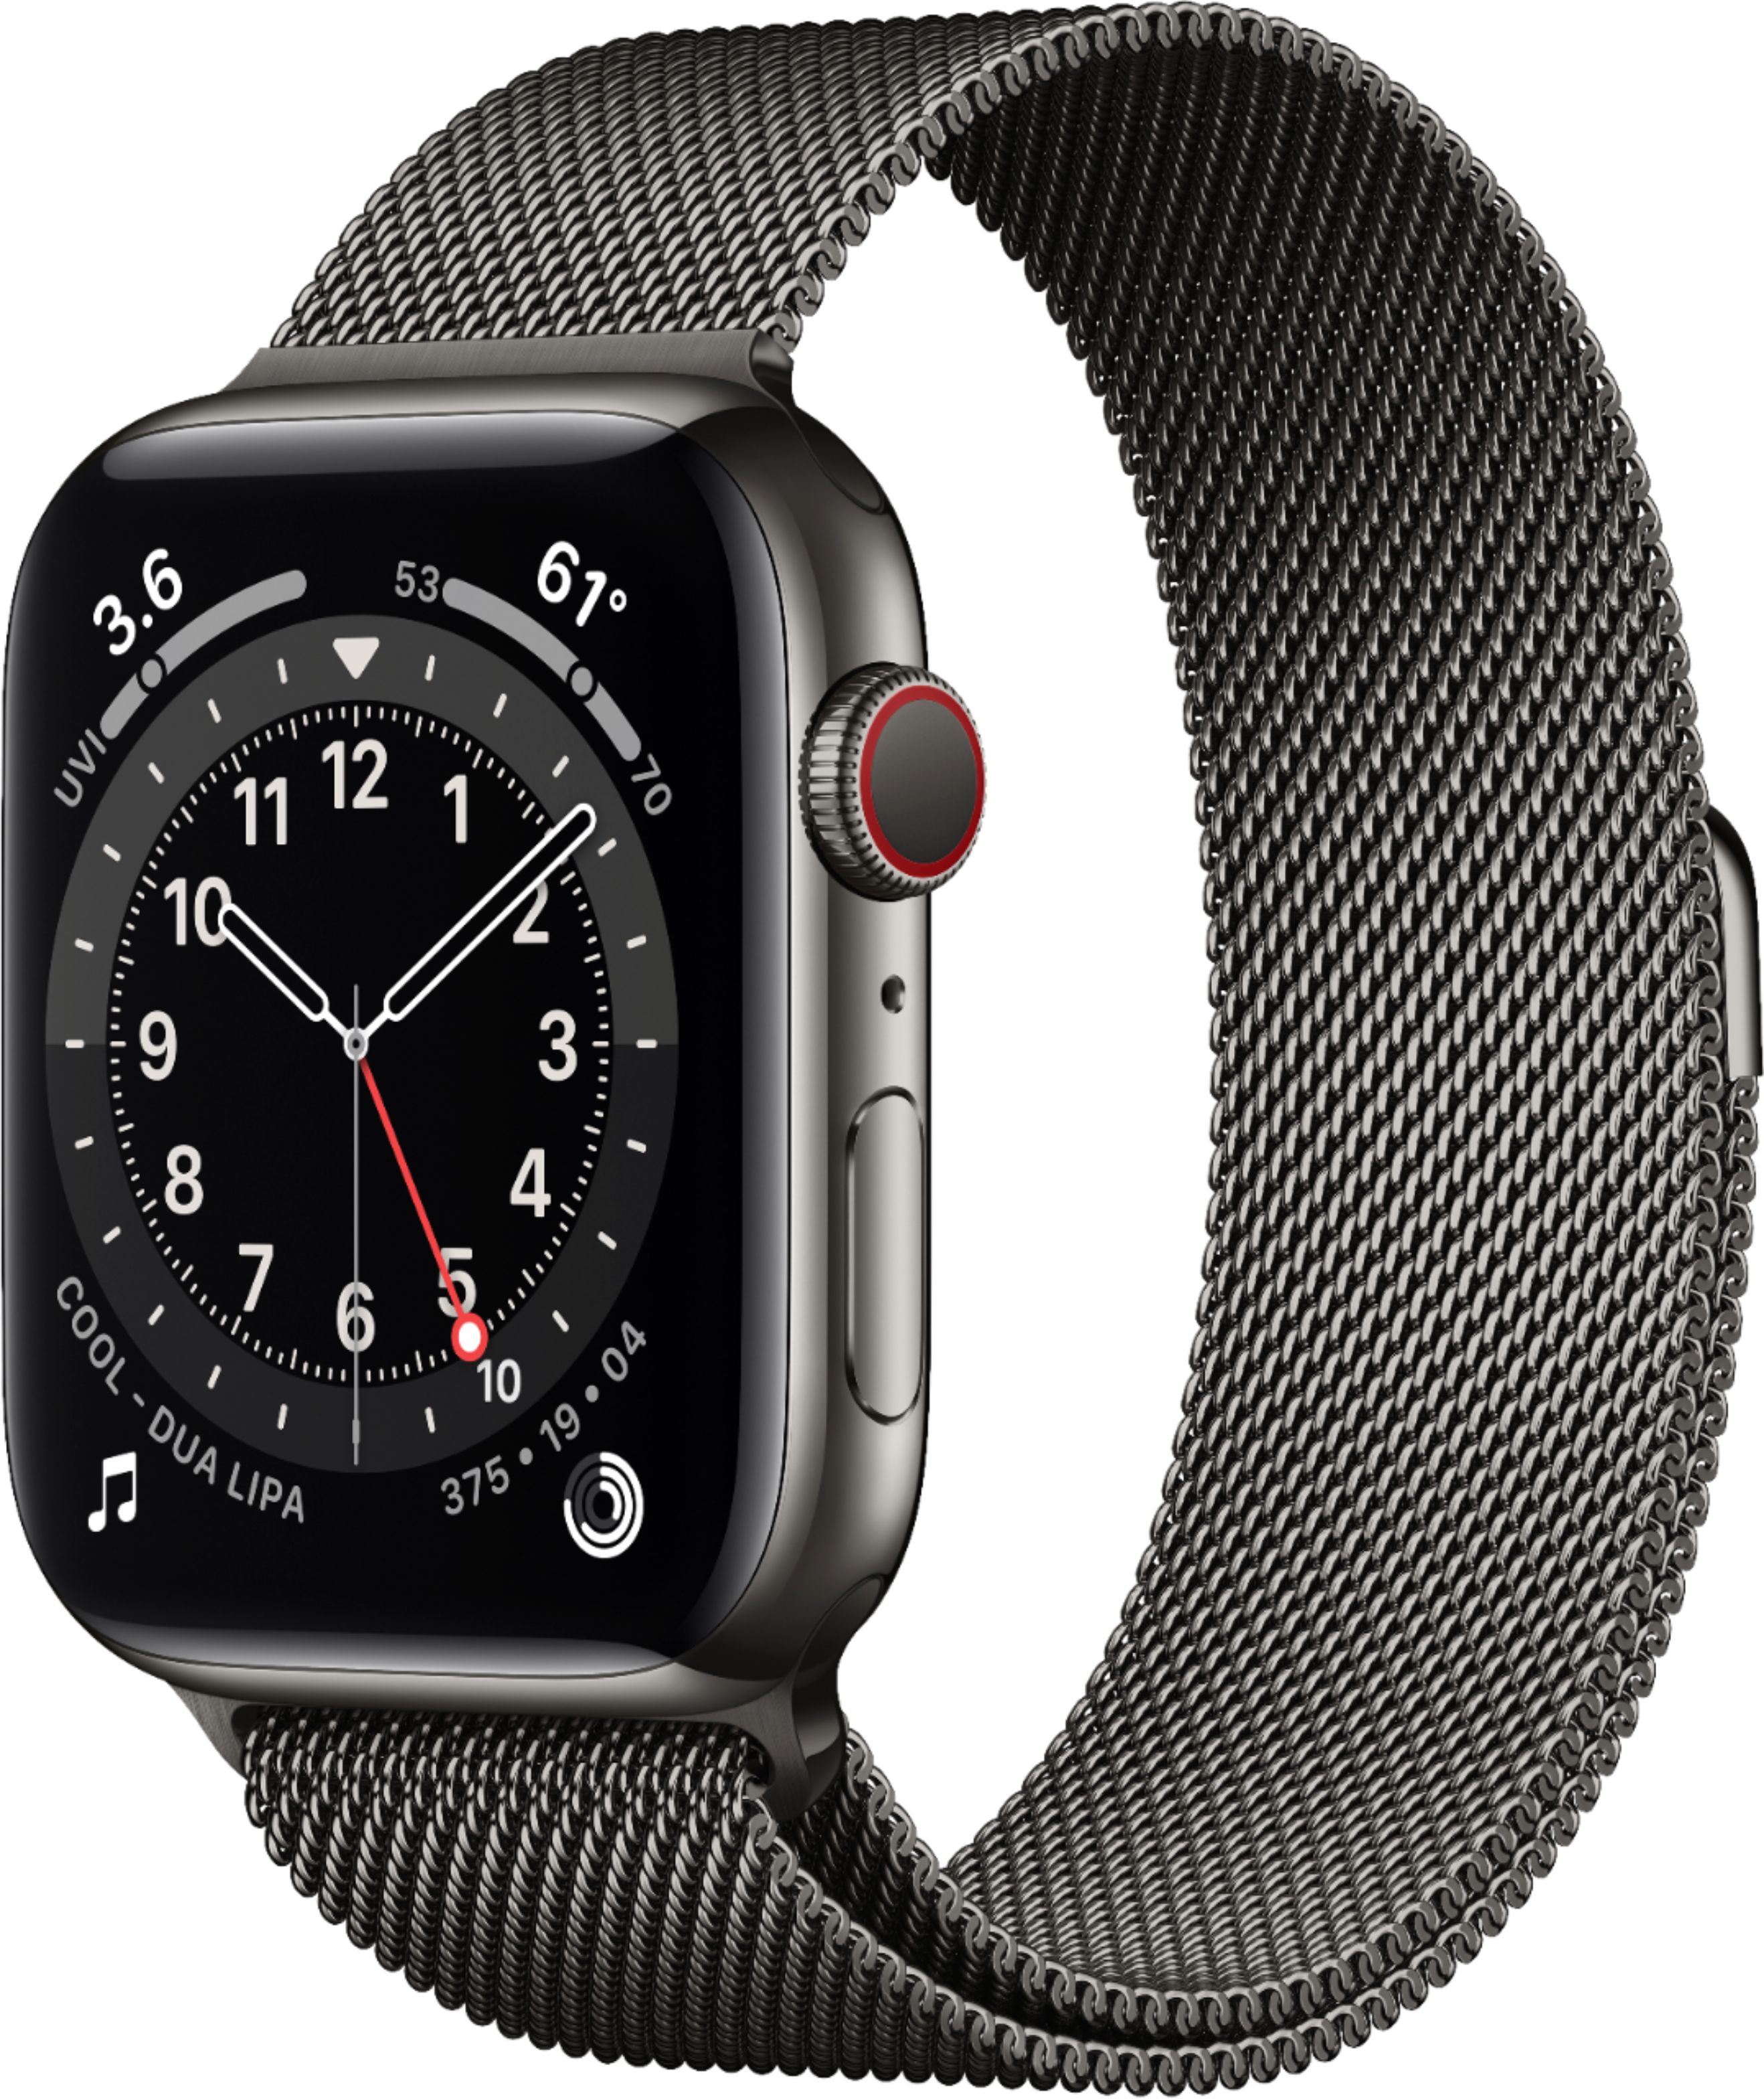 Apple Watch Series 6 (GPS + Cellular) 44mm Graphite - Best Buy